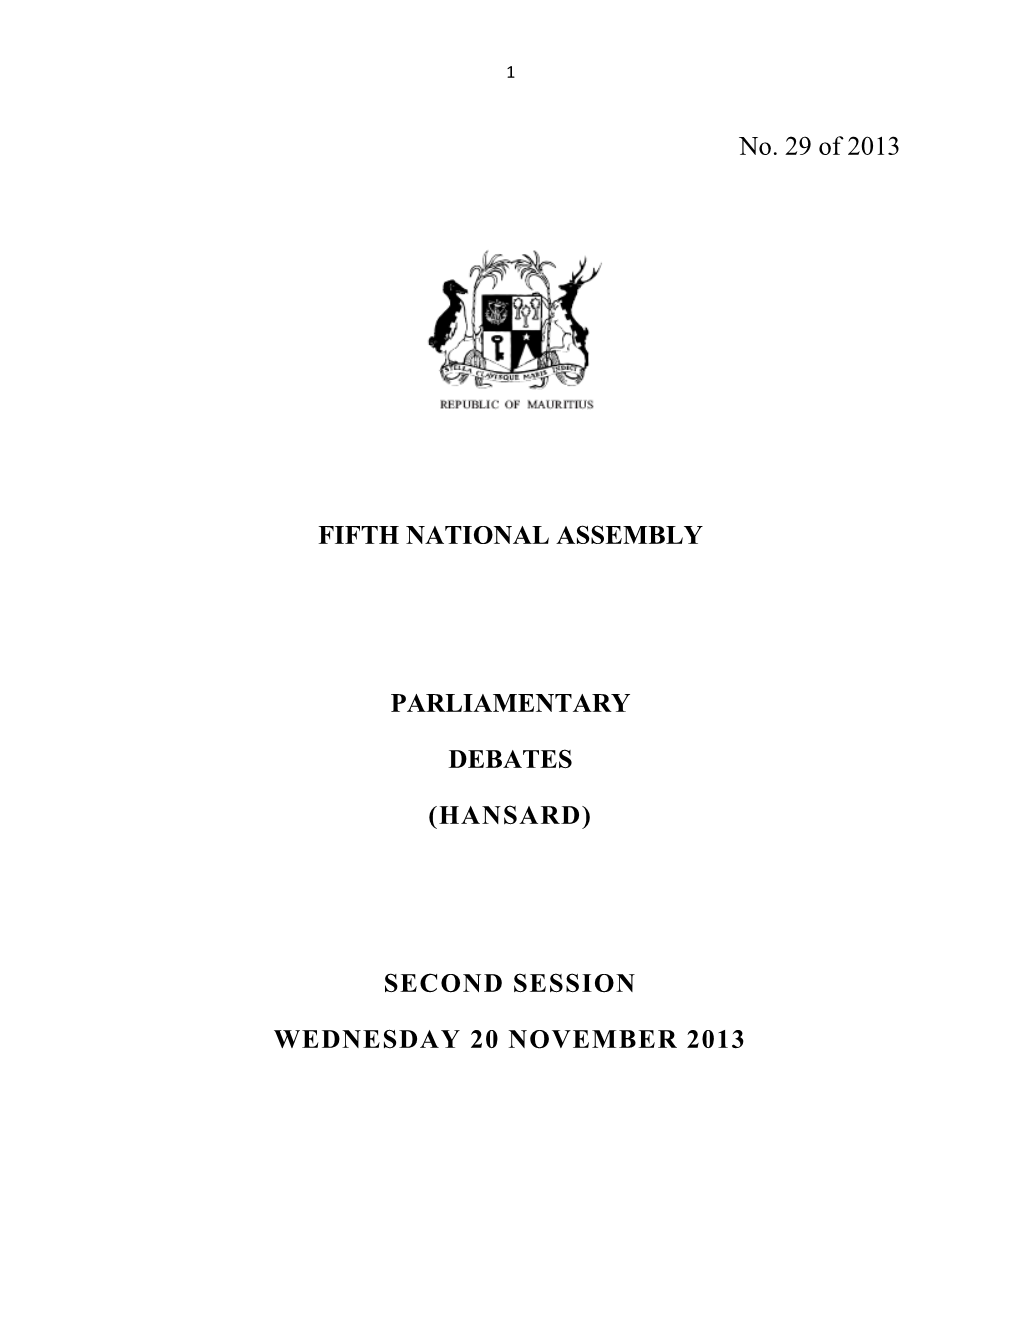 No. 29 of 2013 FIFTH NATIONAL ASSEMBLY PARLIAMENTARY DEBATES (HANSARD) SECOND SESSION WEDNESDAY 20 NOVEMBER 2013